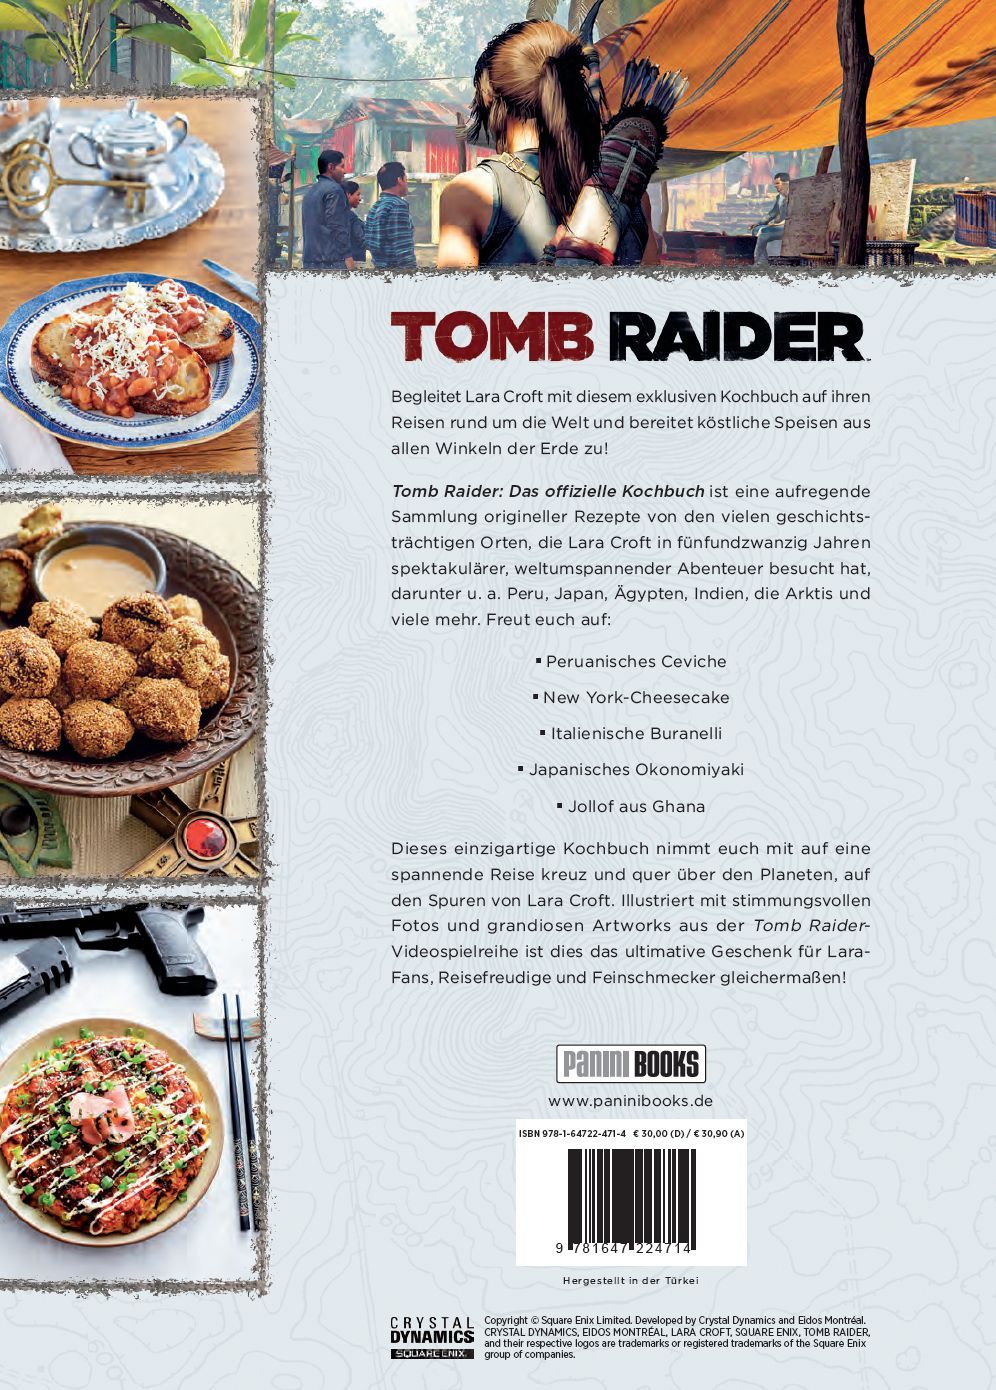 Tomb Raider: Das offizielle Kochbuch